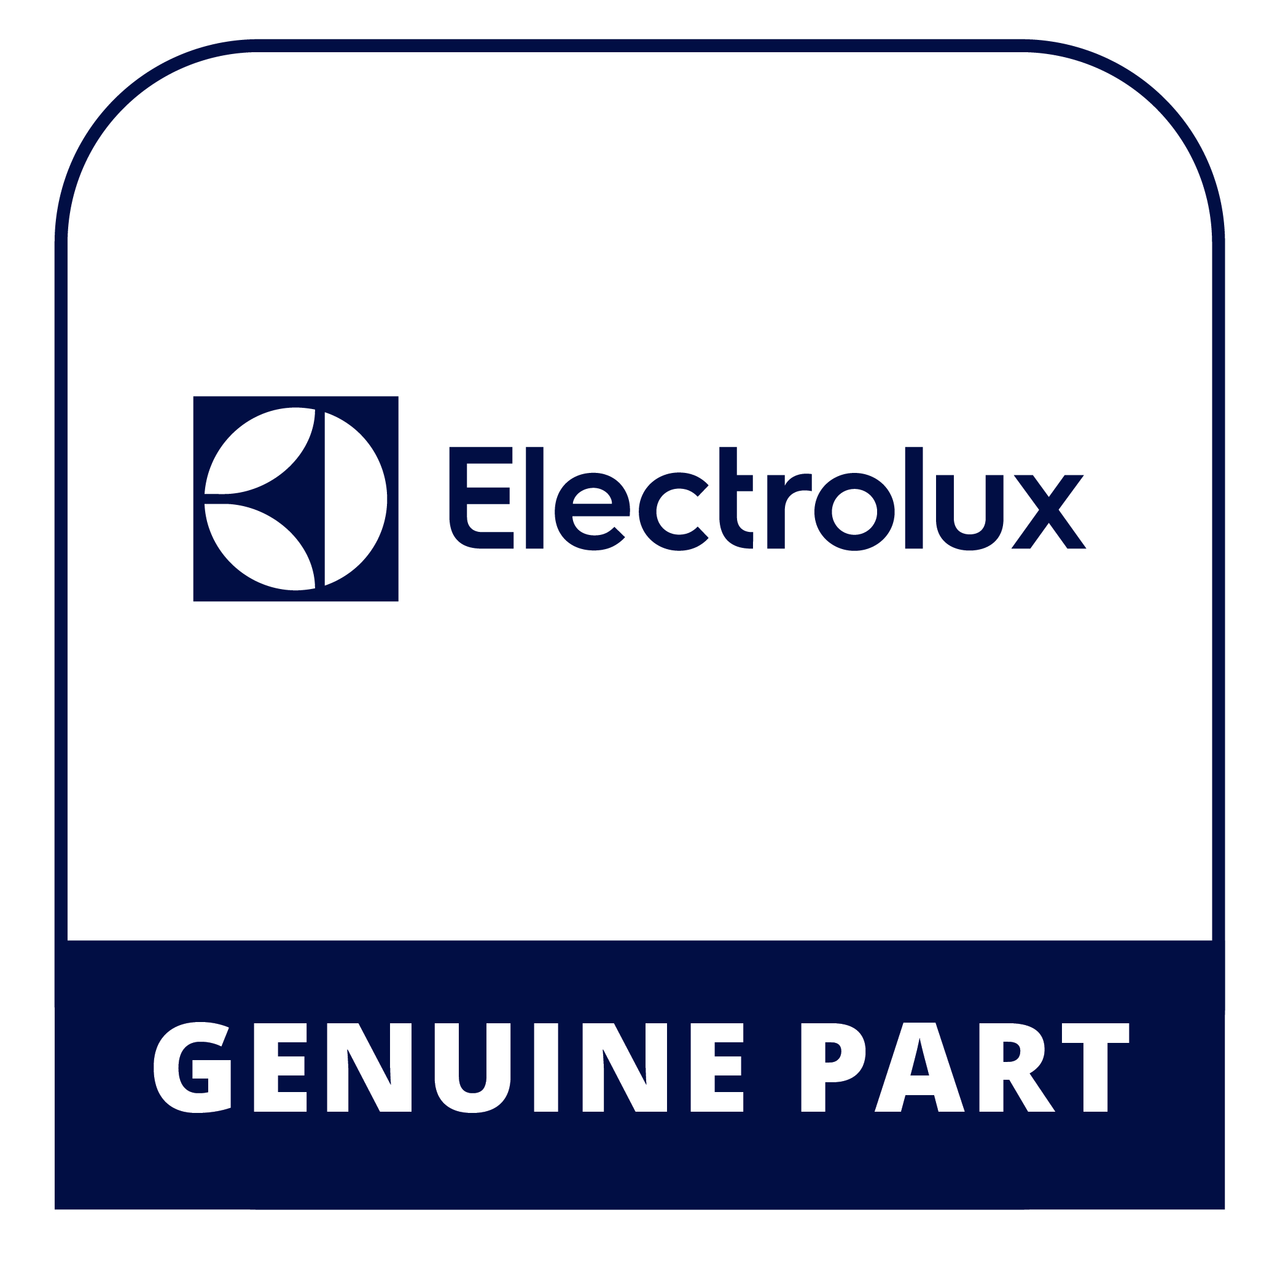 Frigidaire - Electrolux 5304493879 Crisper Pan Kit - Genuine Electrolux Part